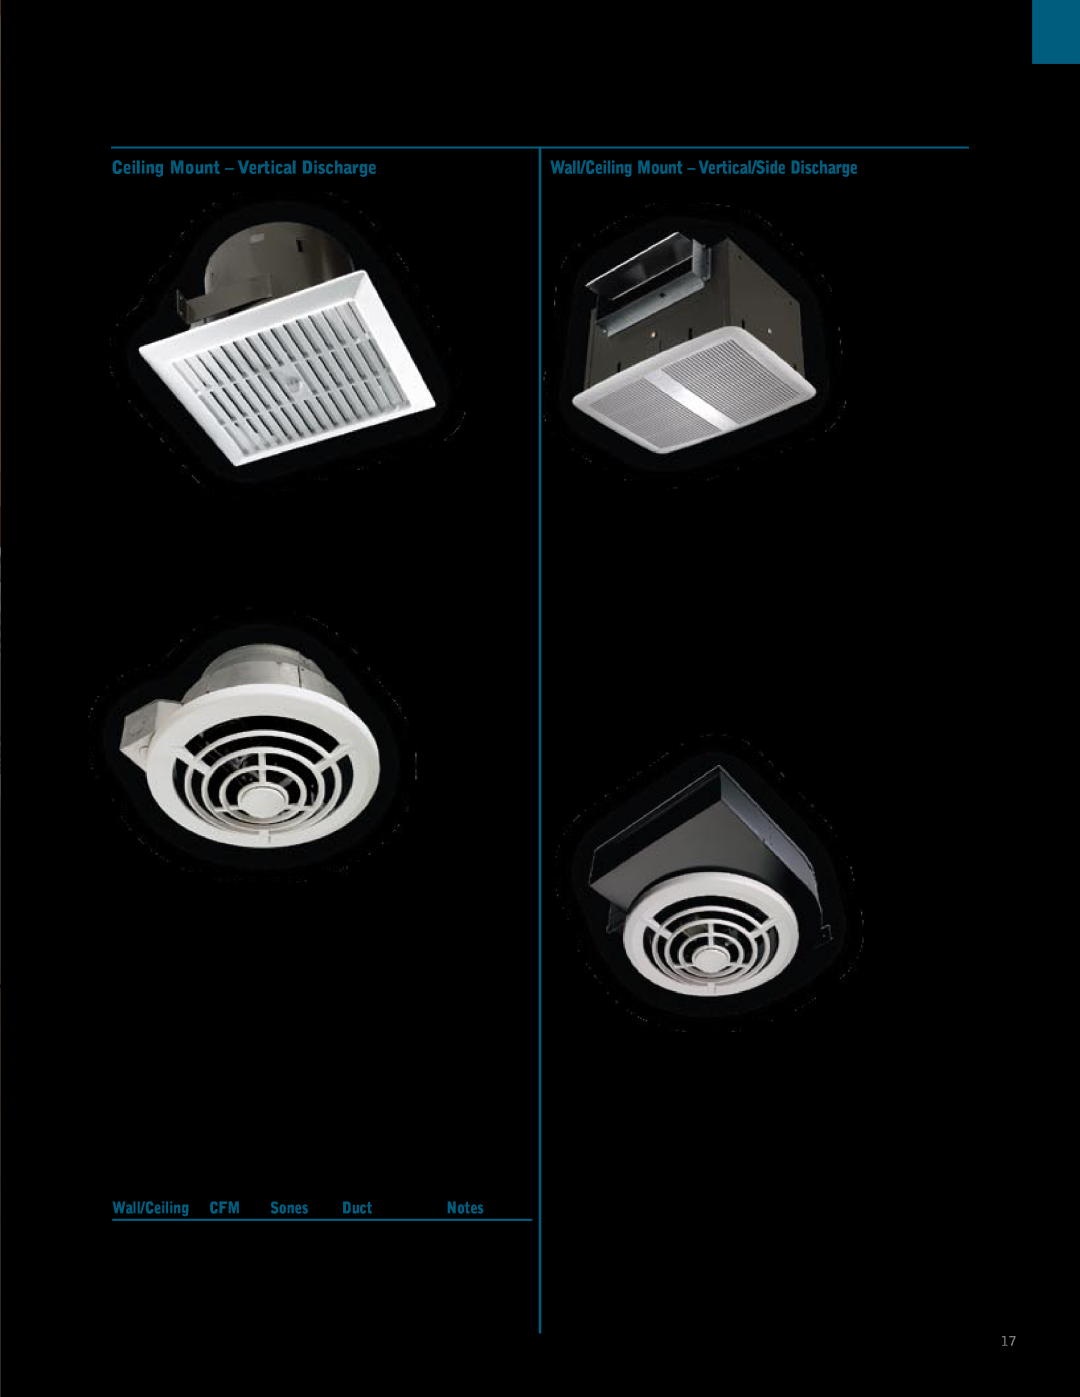 NuTone QTRN Ceiling Mount - Vertical Discharge, Wall/Ceiling Mount - Vertical/Side Discharge, Model QT200 & QT300 